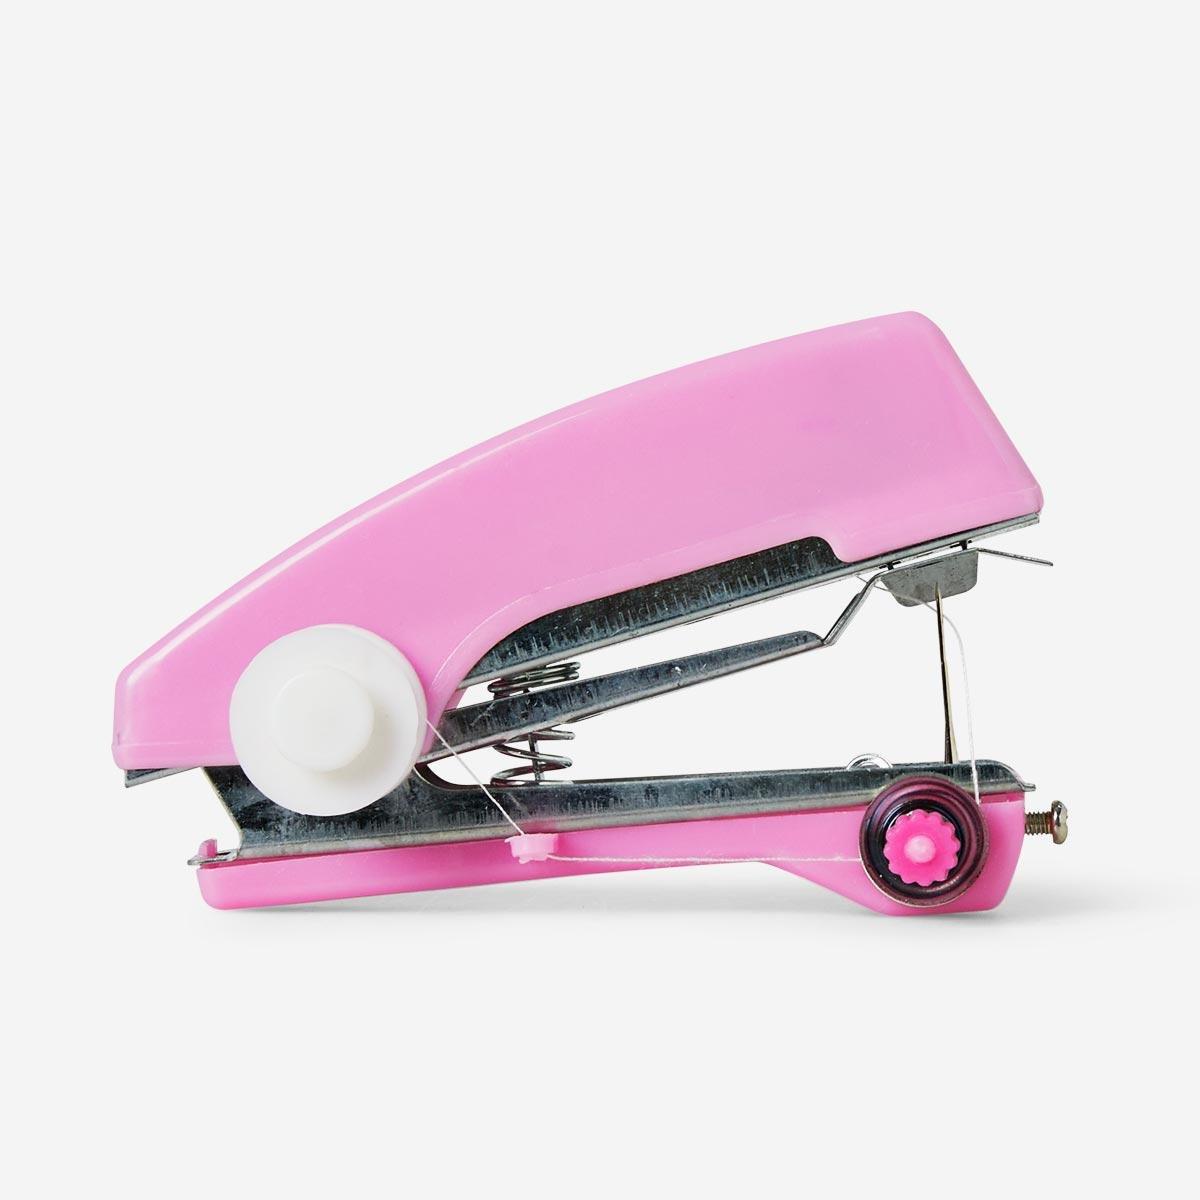 Pink handheld sewing machine